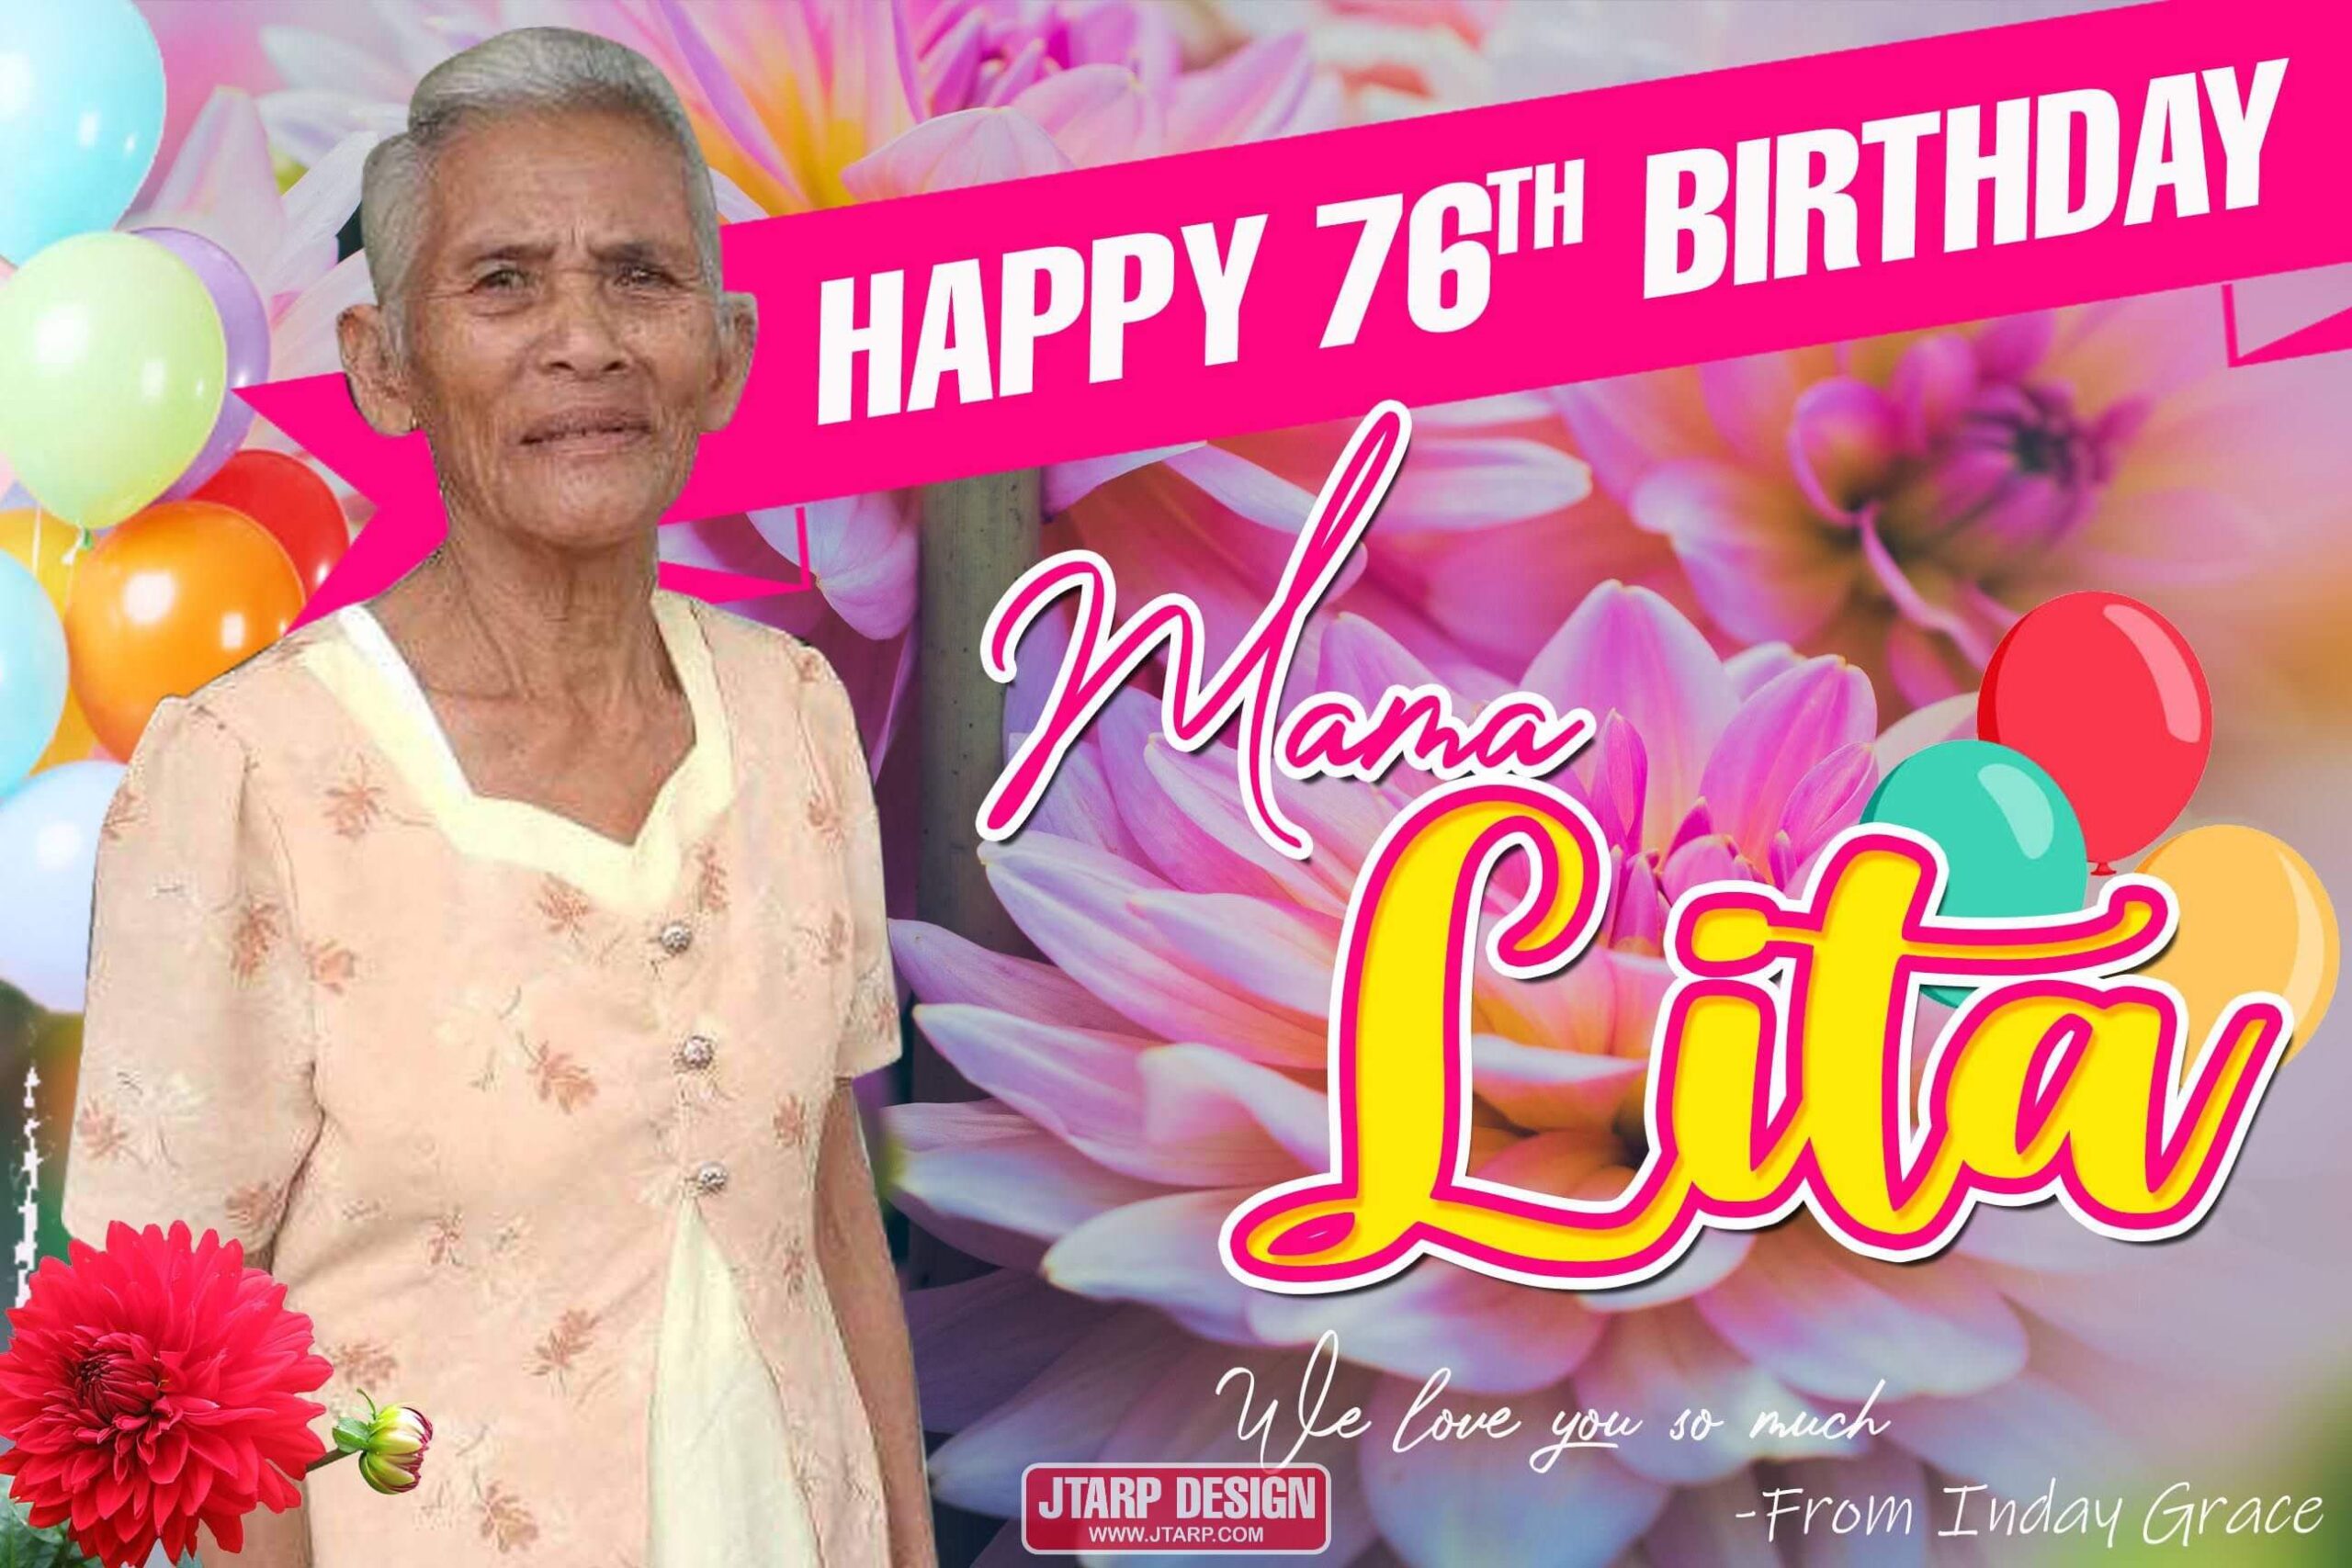 3x2 Happy 76th Birthday Mama Lita